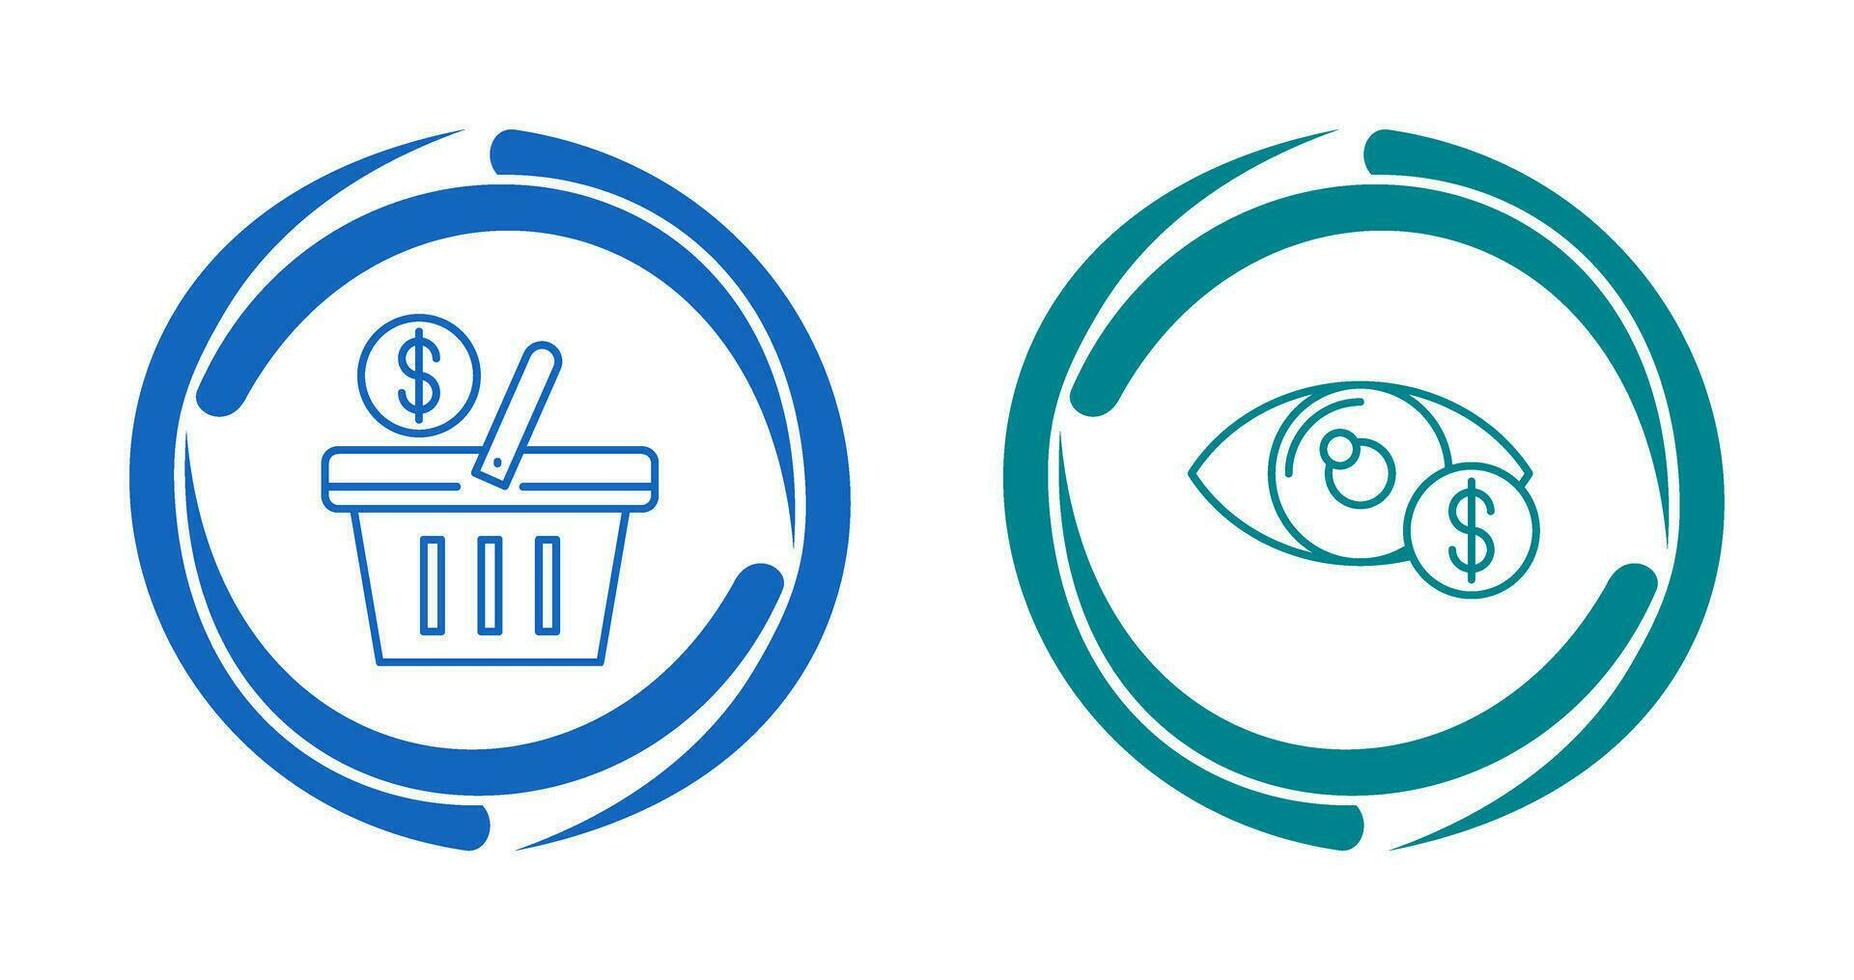 Shopping Basket and Eye Icon vector